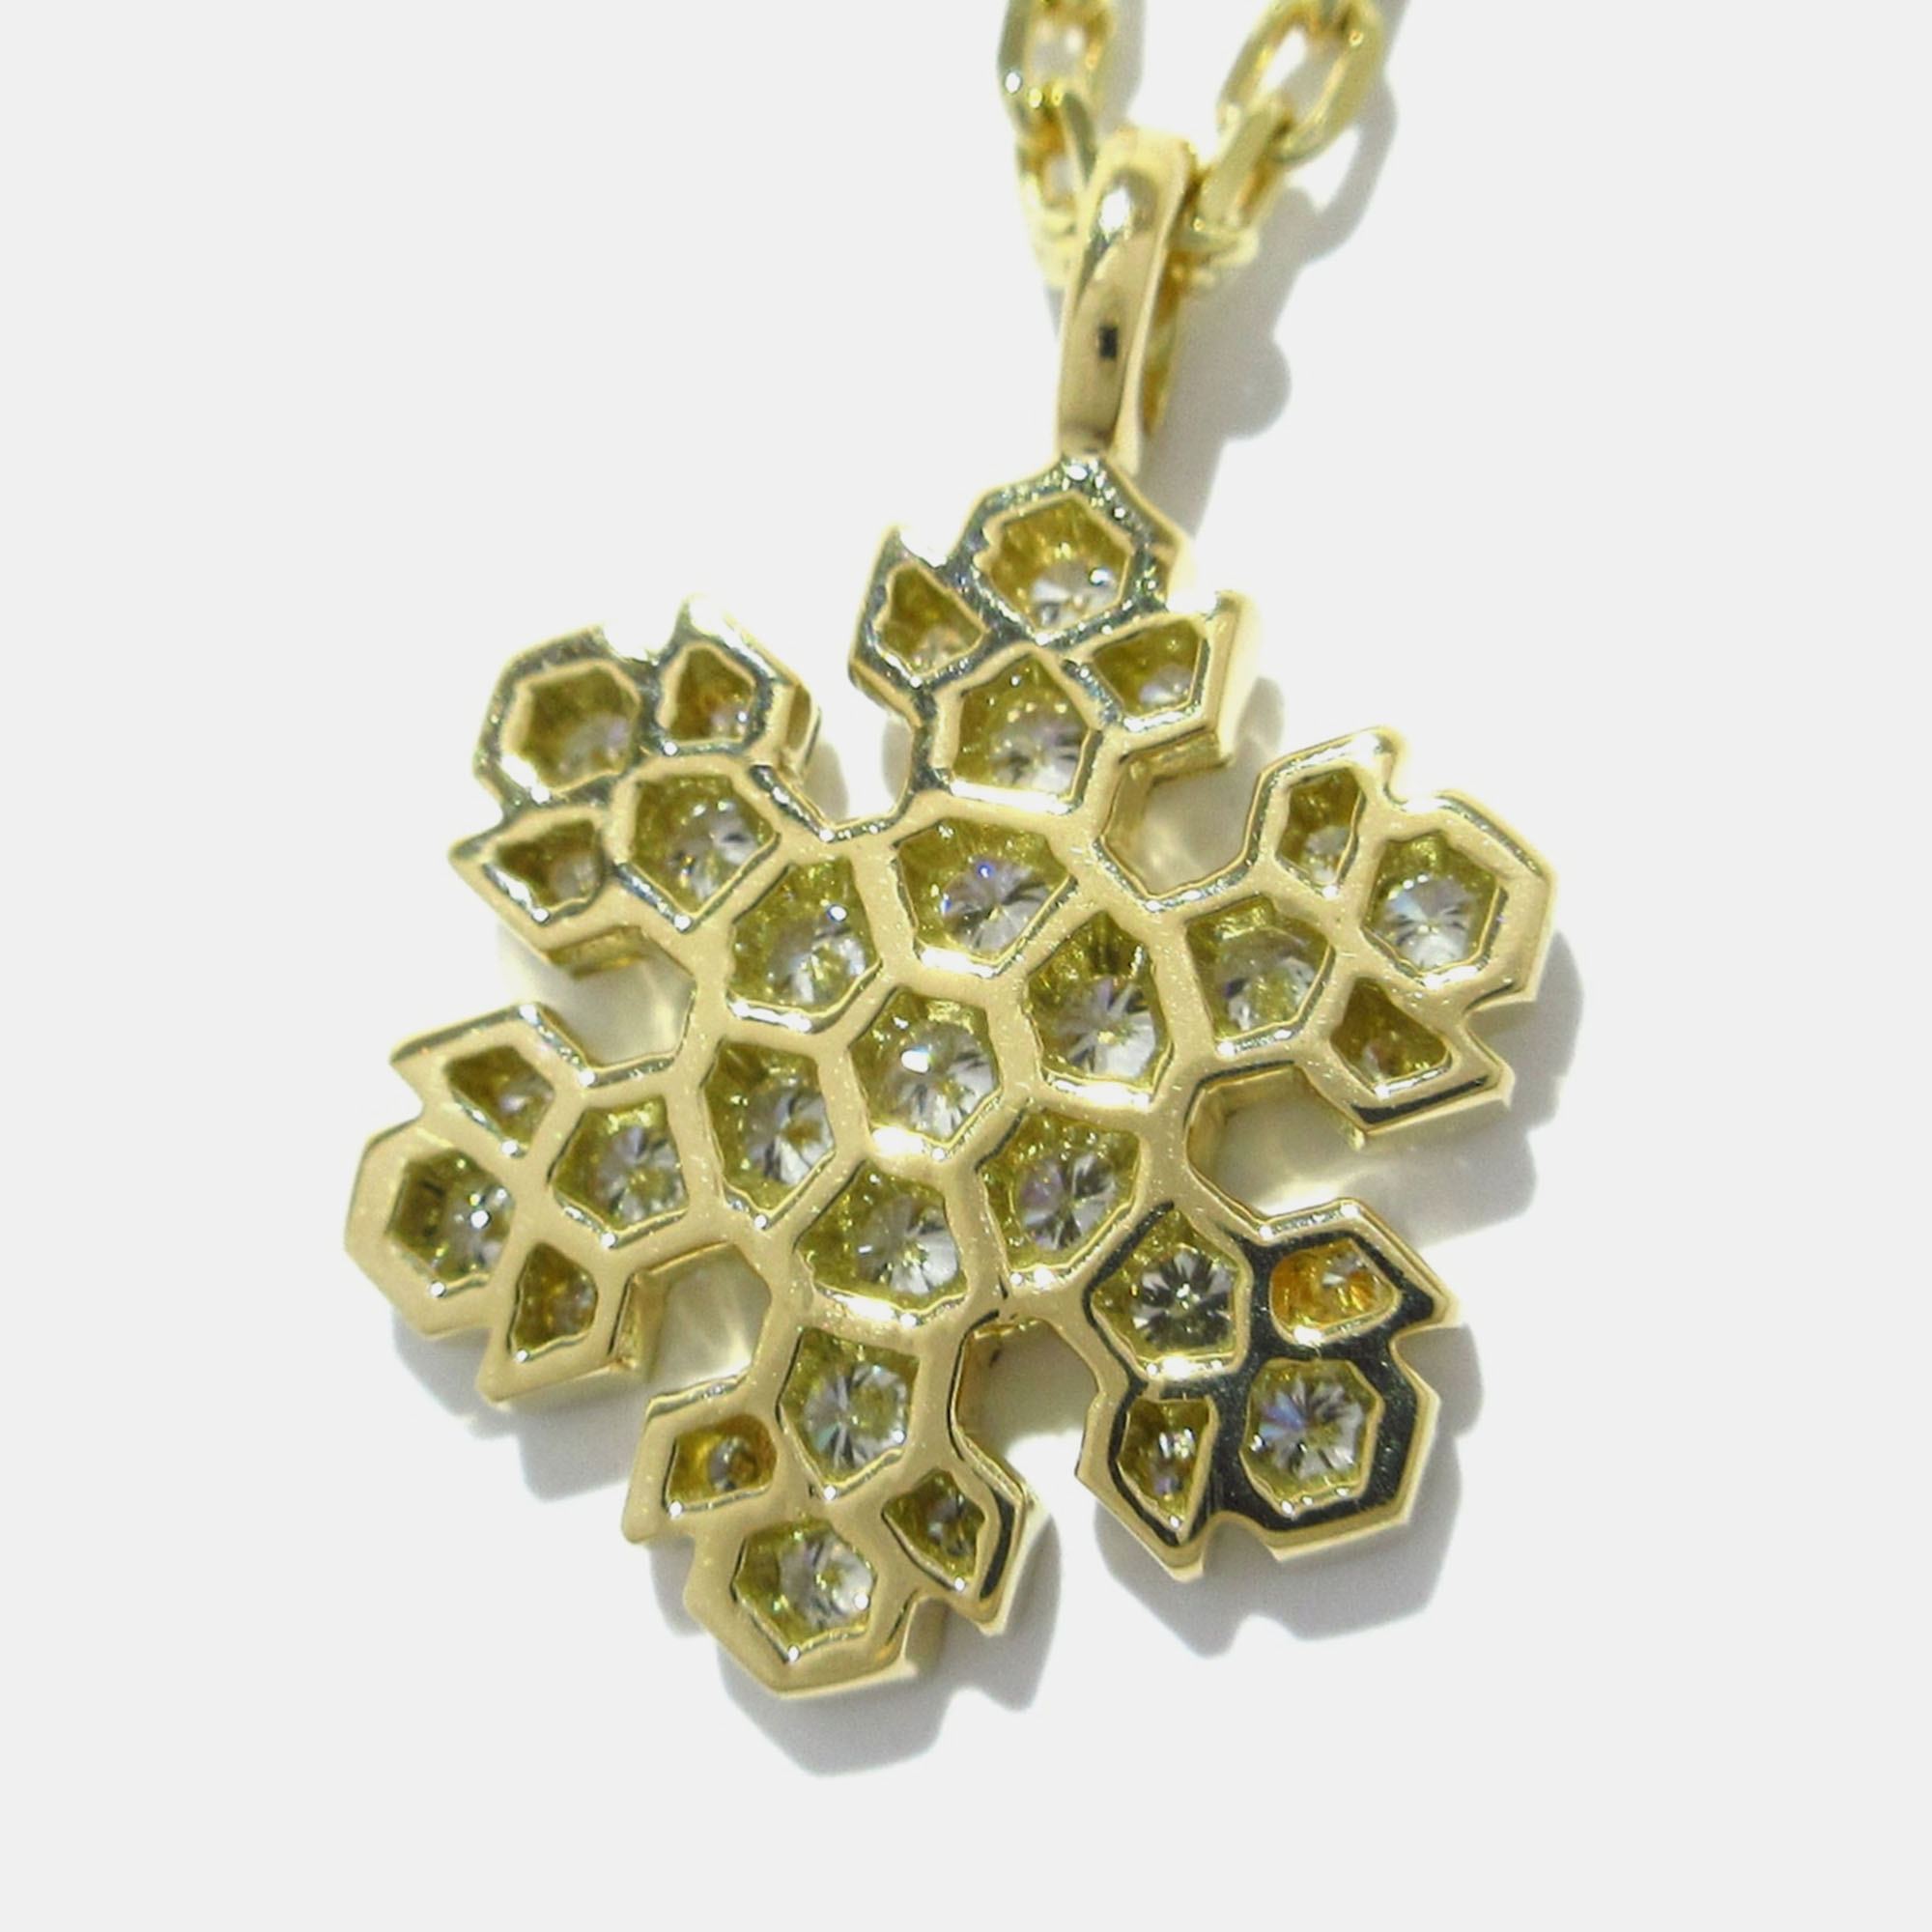 Bvlgari Fiocco Di Neve Snowflake 18K Yellow Gold Diamond Necklace